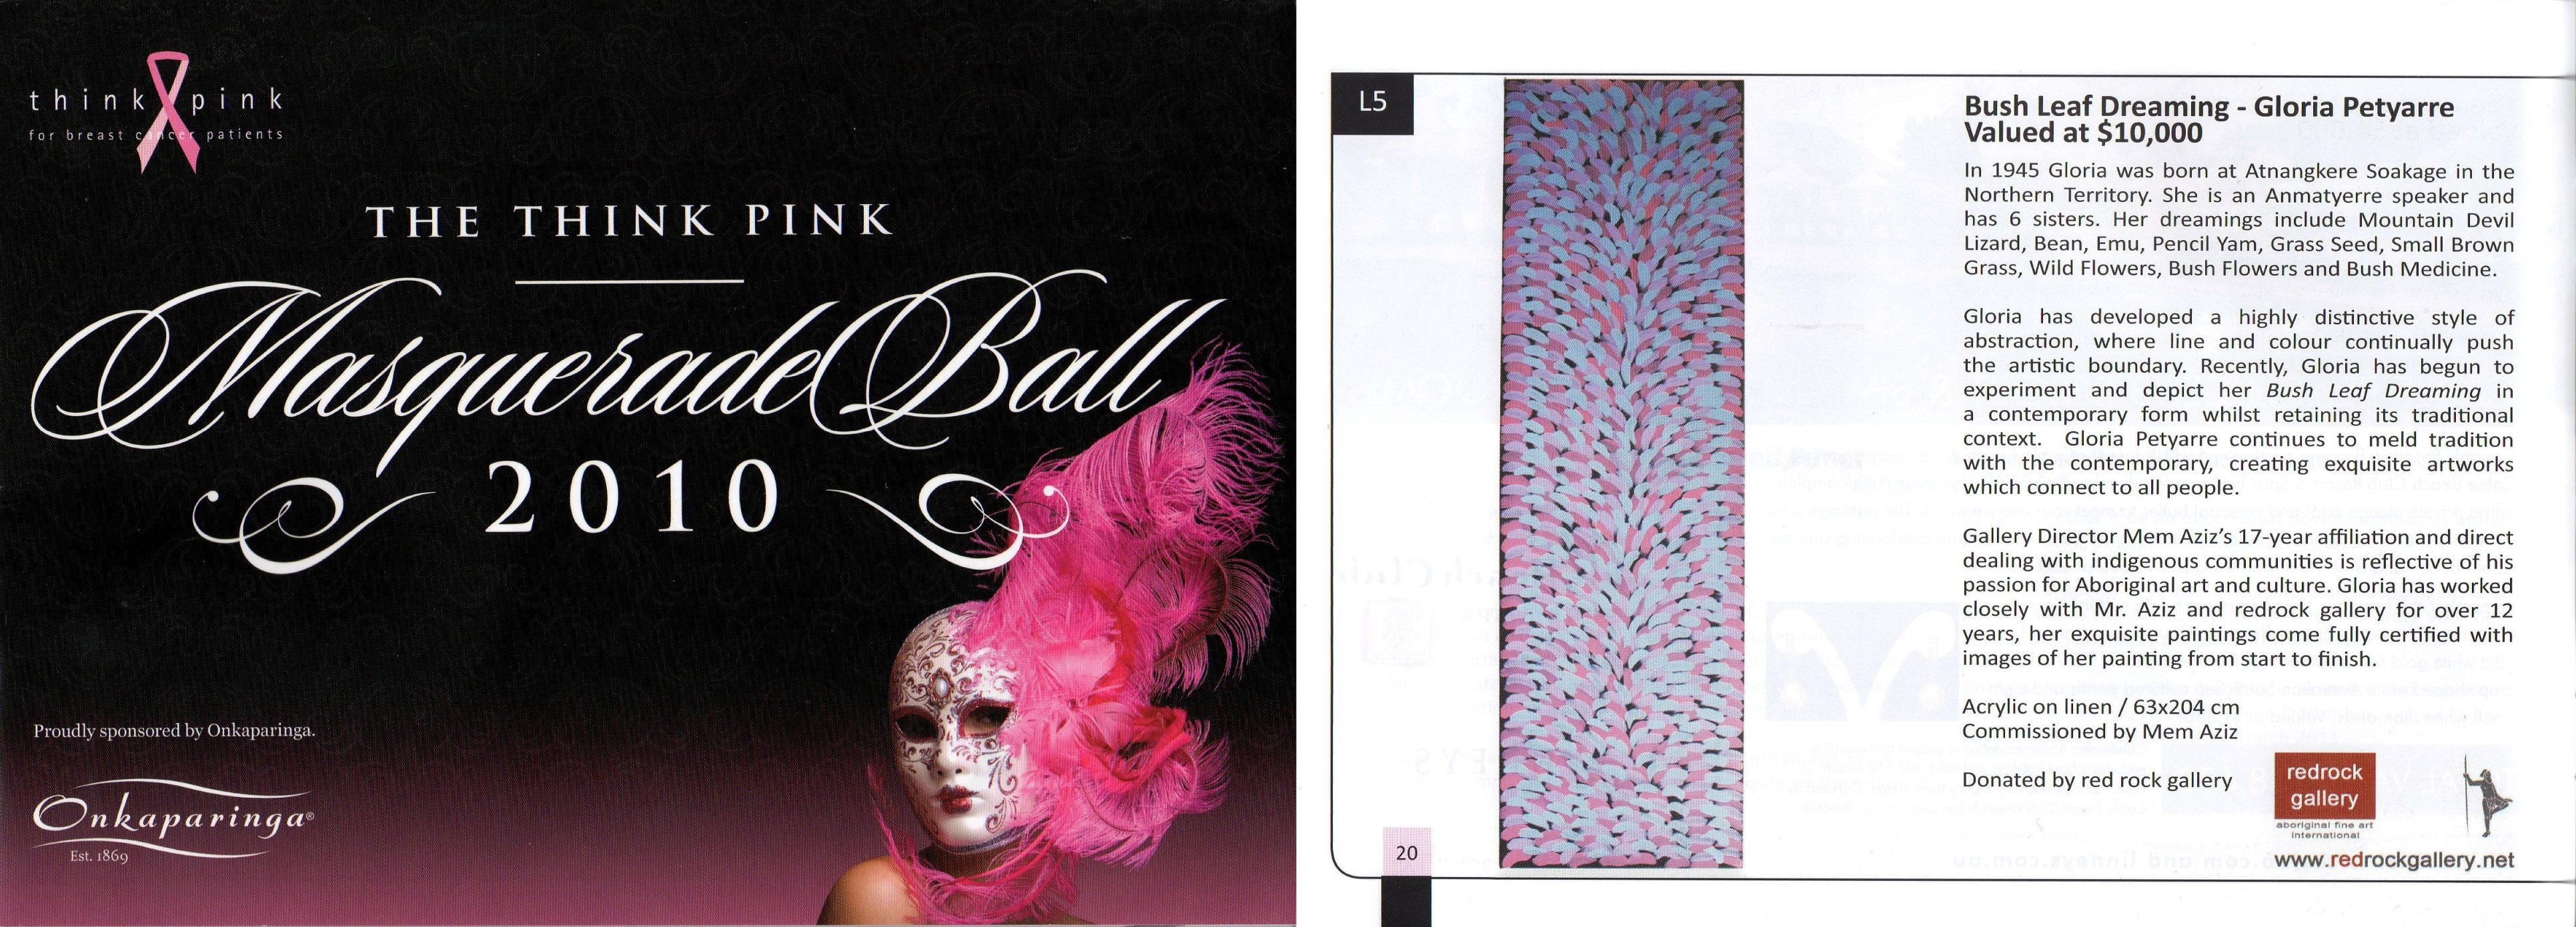 the_think_pink_masquerade_ball_2010.jpg